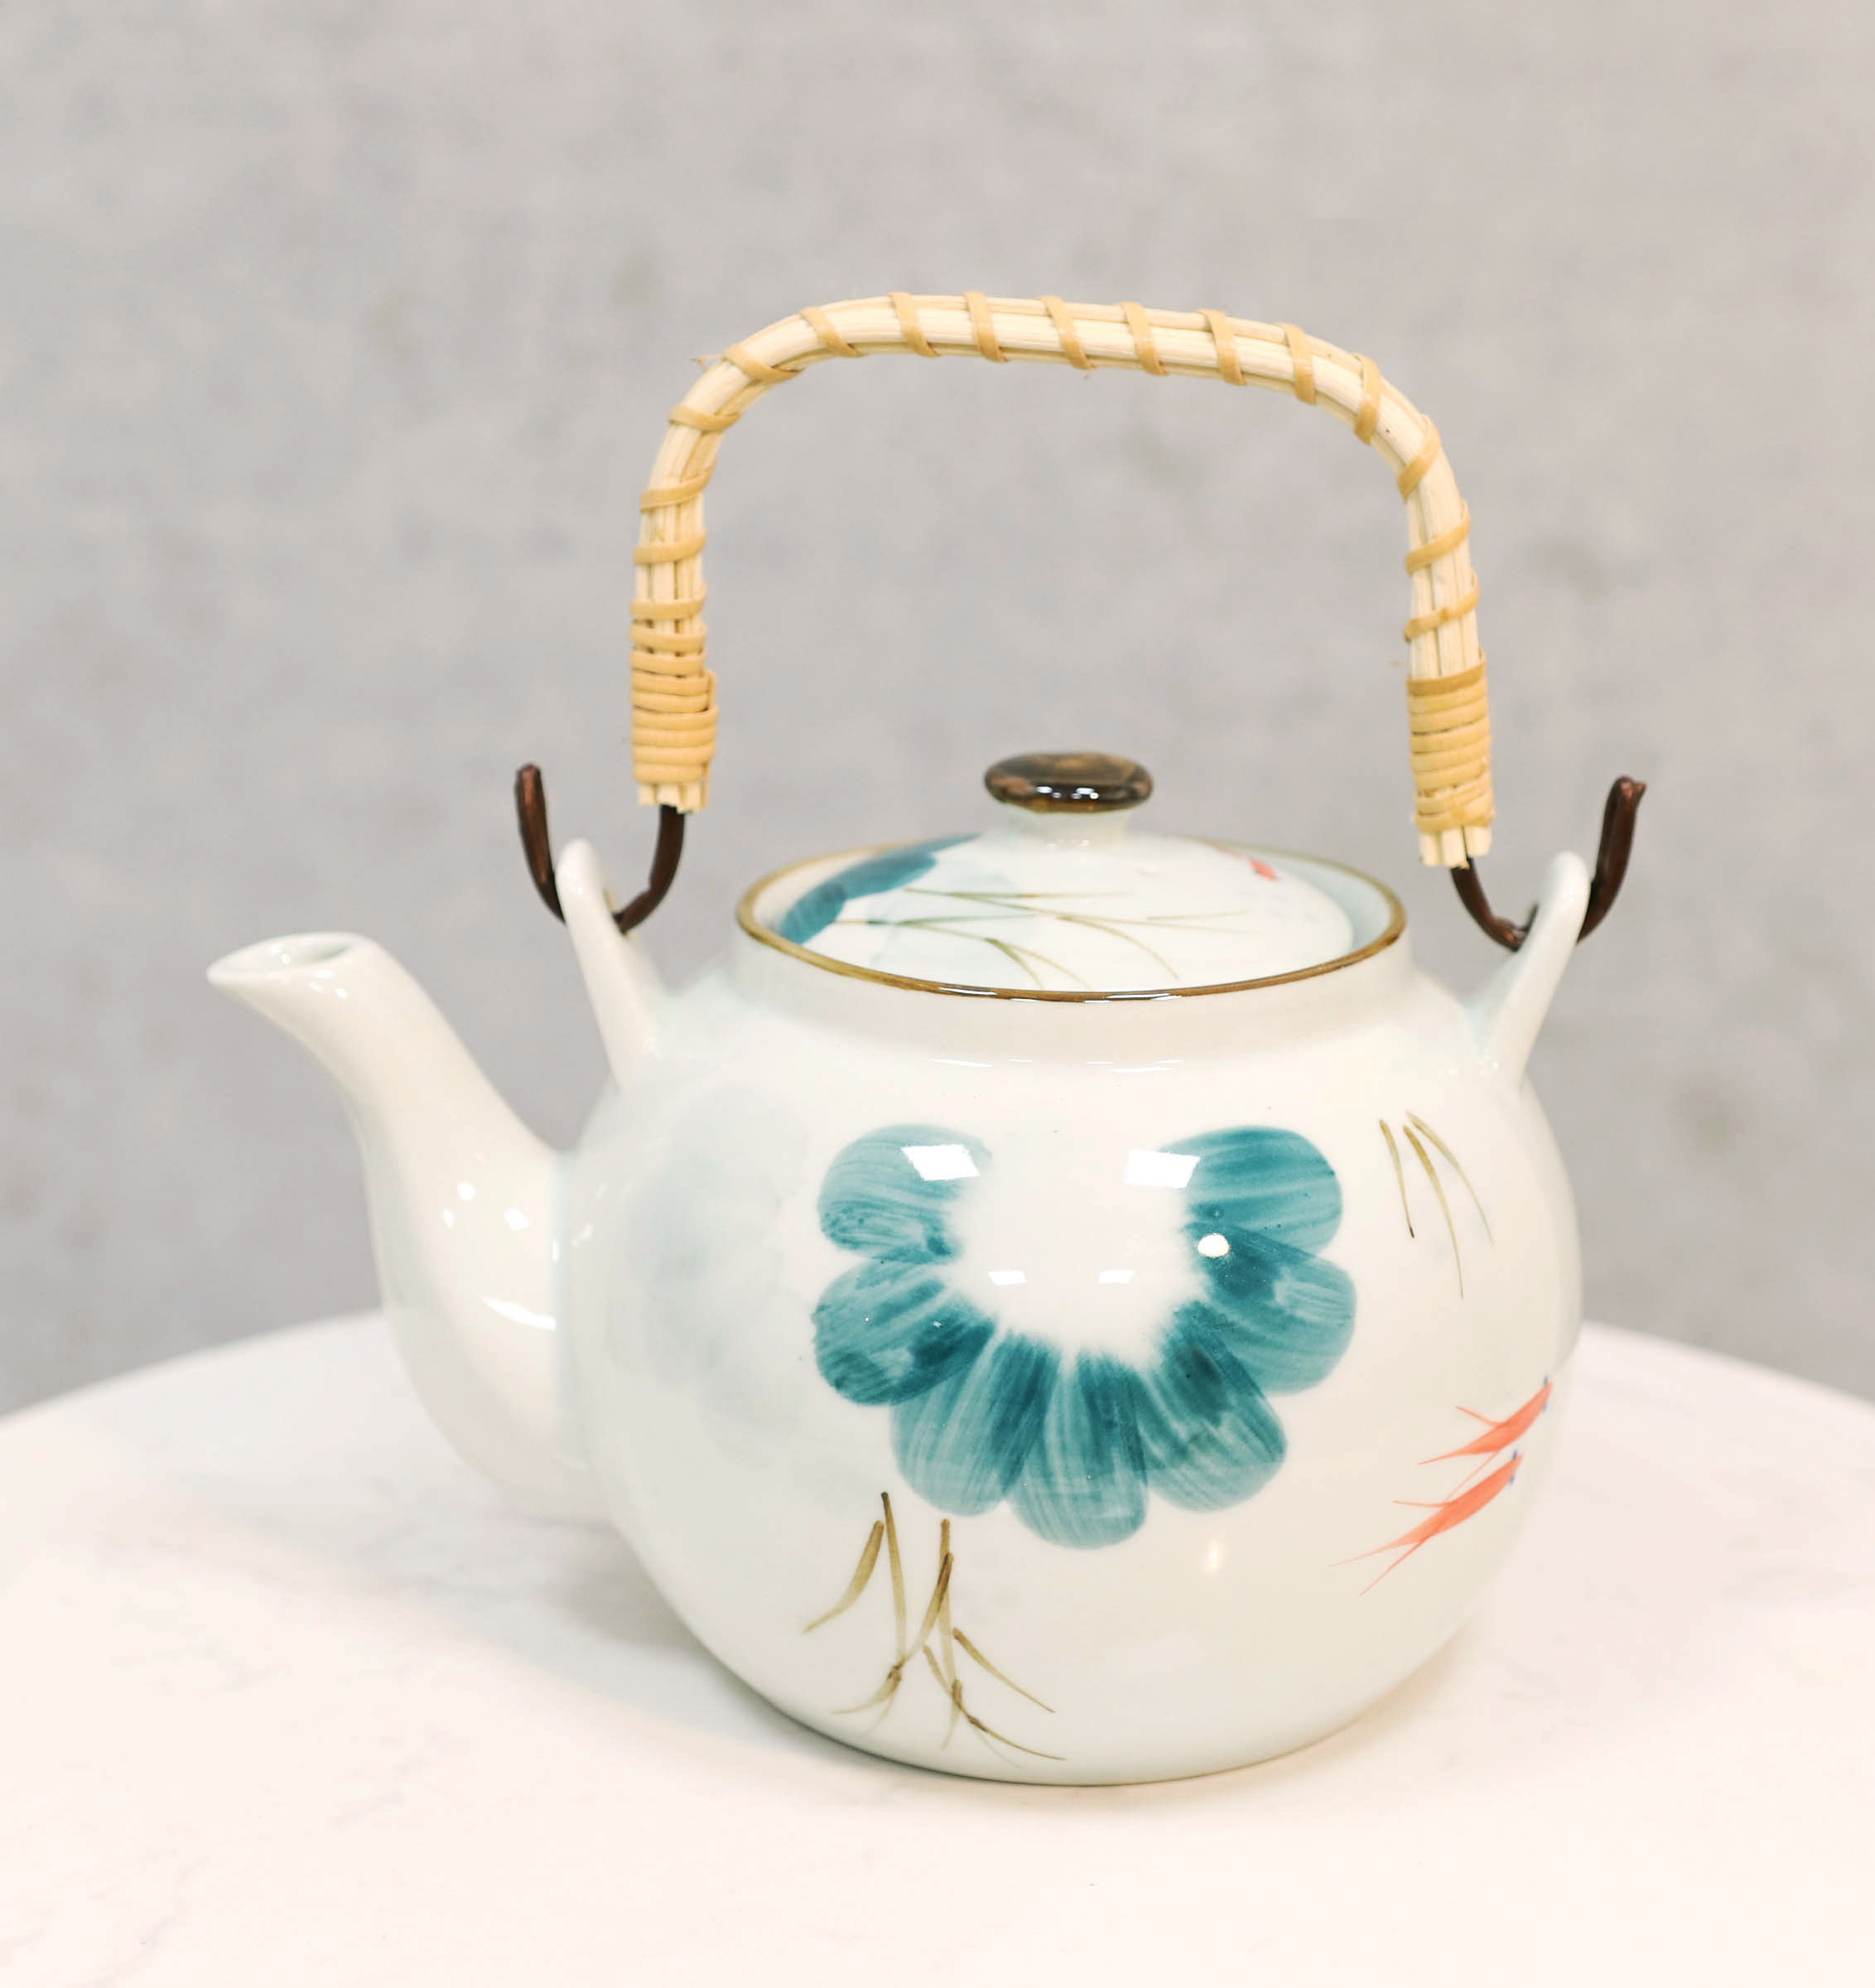 Feng Shui Yin Yang Koi Fish Pair In Lily Pond Ceramic Tea Pot 38oz Teapot Decor - image 1 of 4